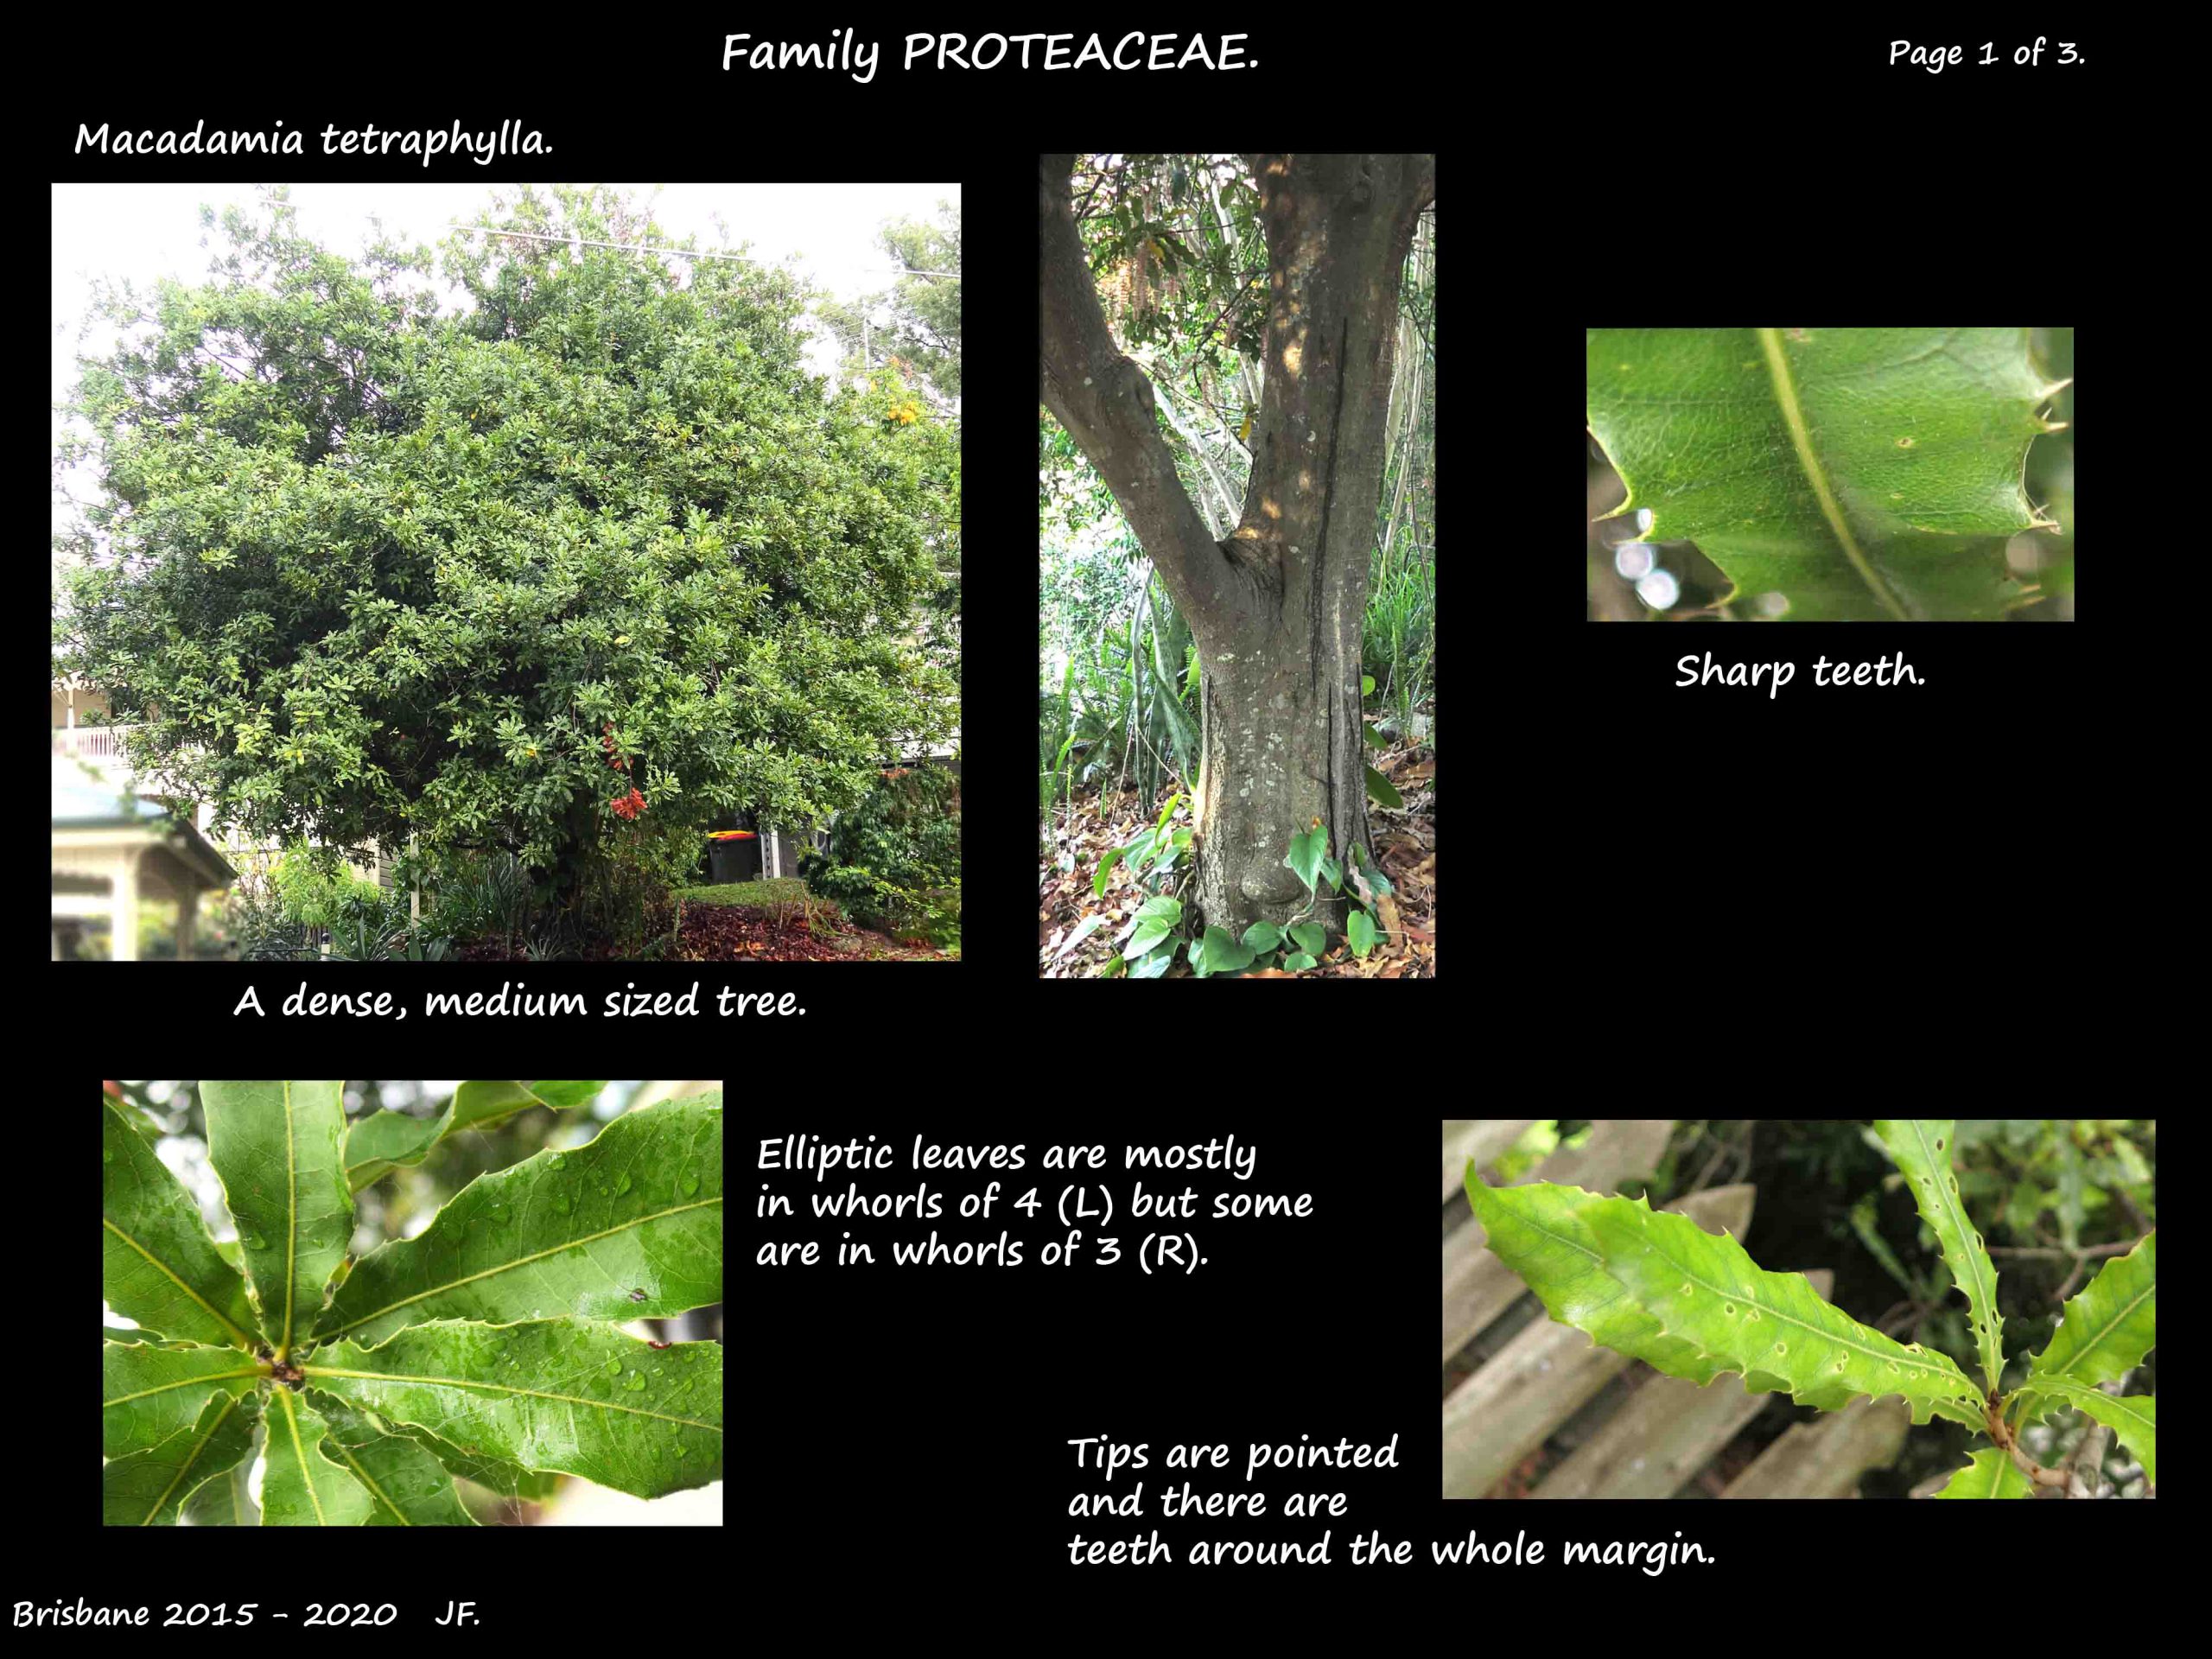 1 Macadamia tetraphylla tree & leaves